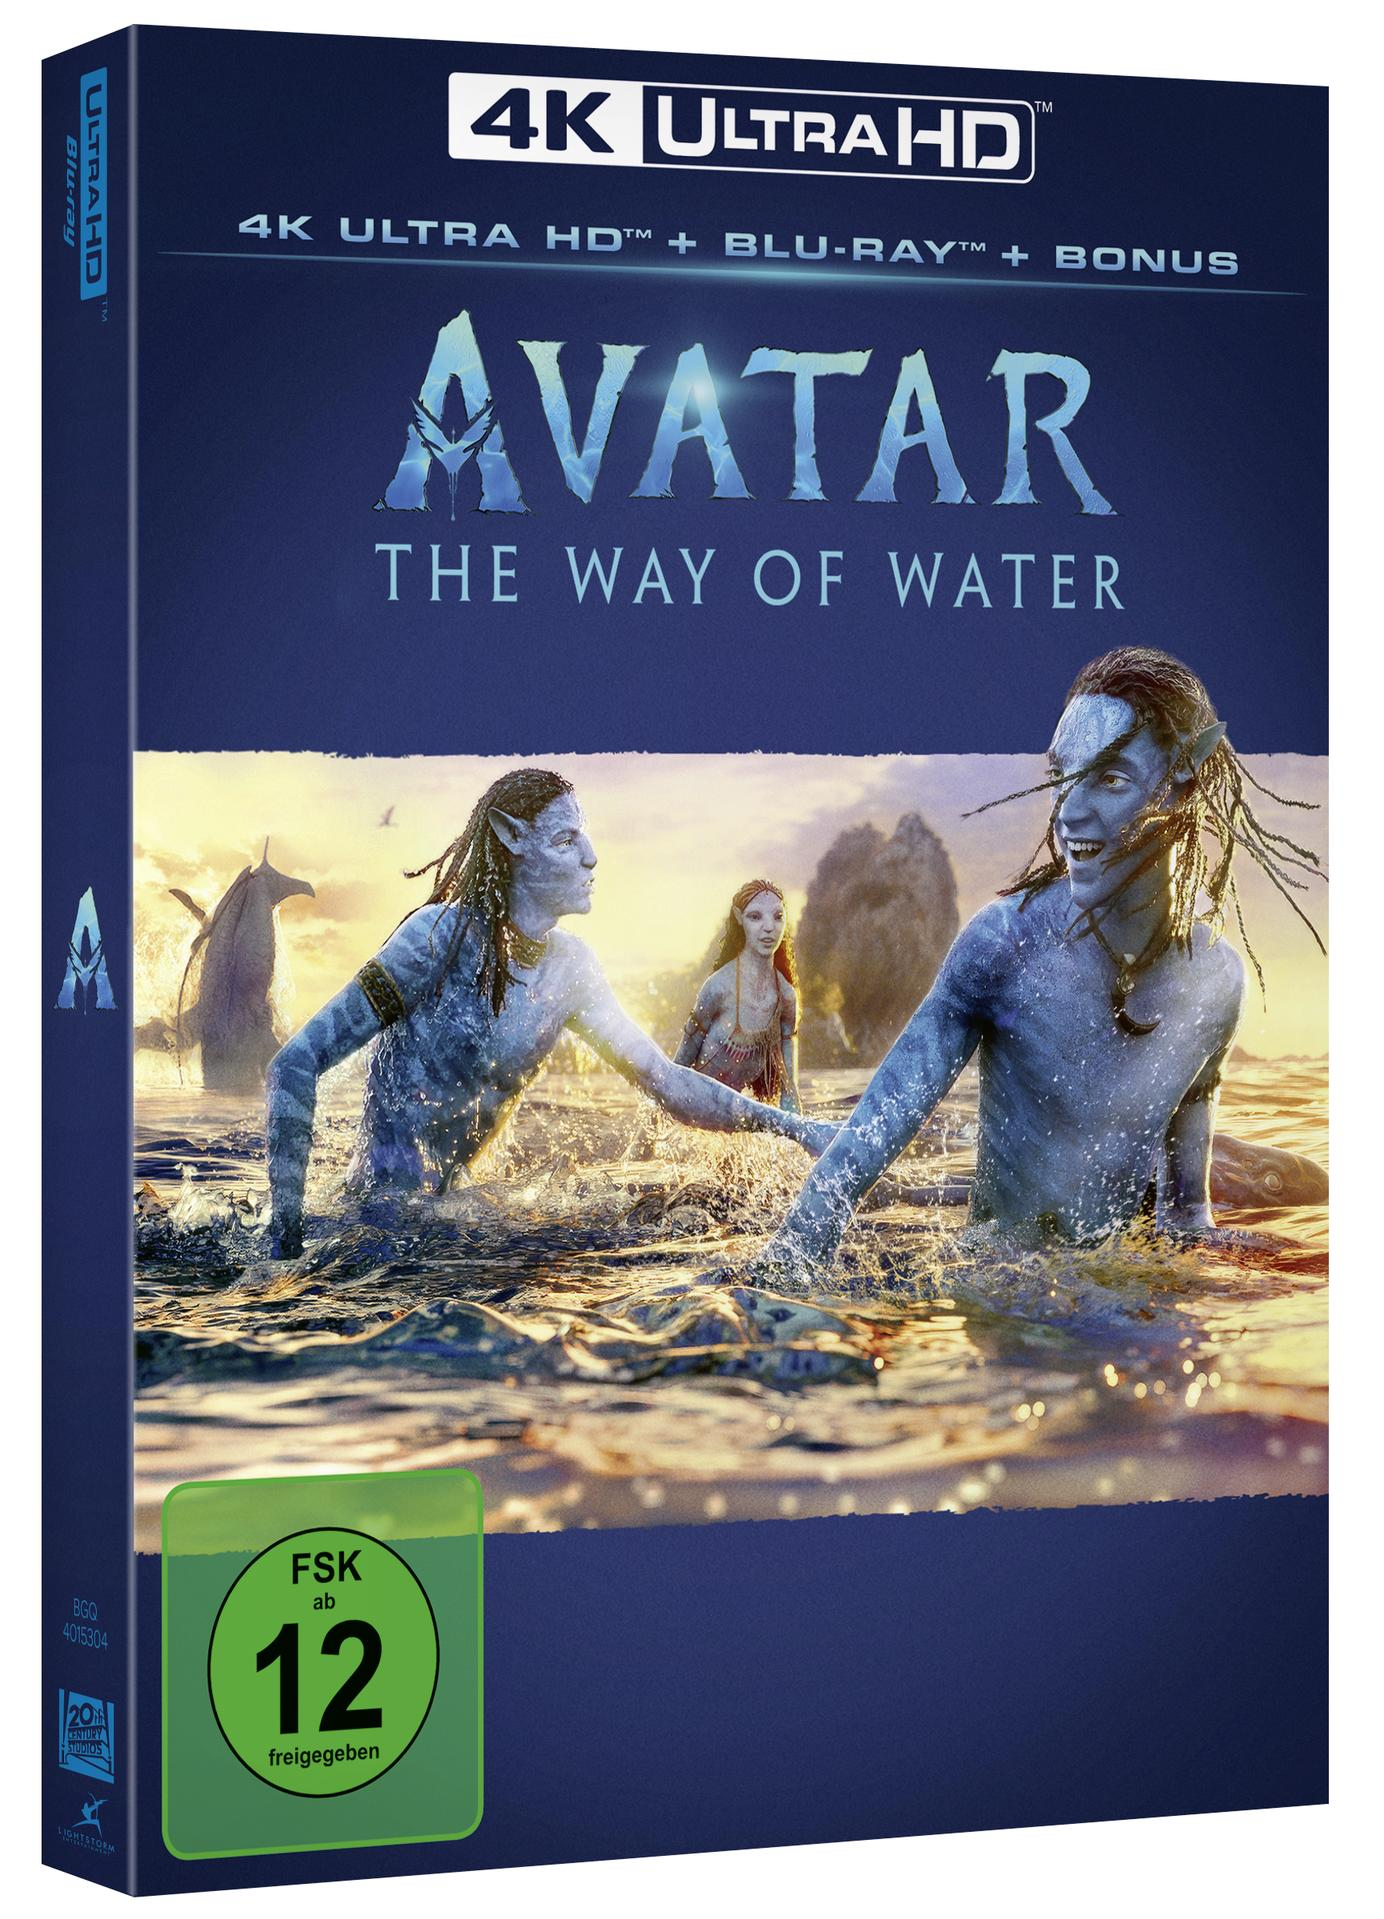 HD Way + Water of 4K Blu-ray Ultra Blu-ray Avatar: The